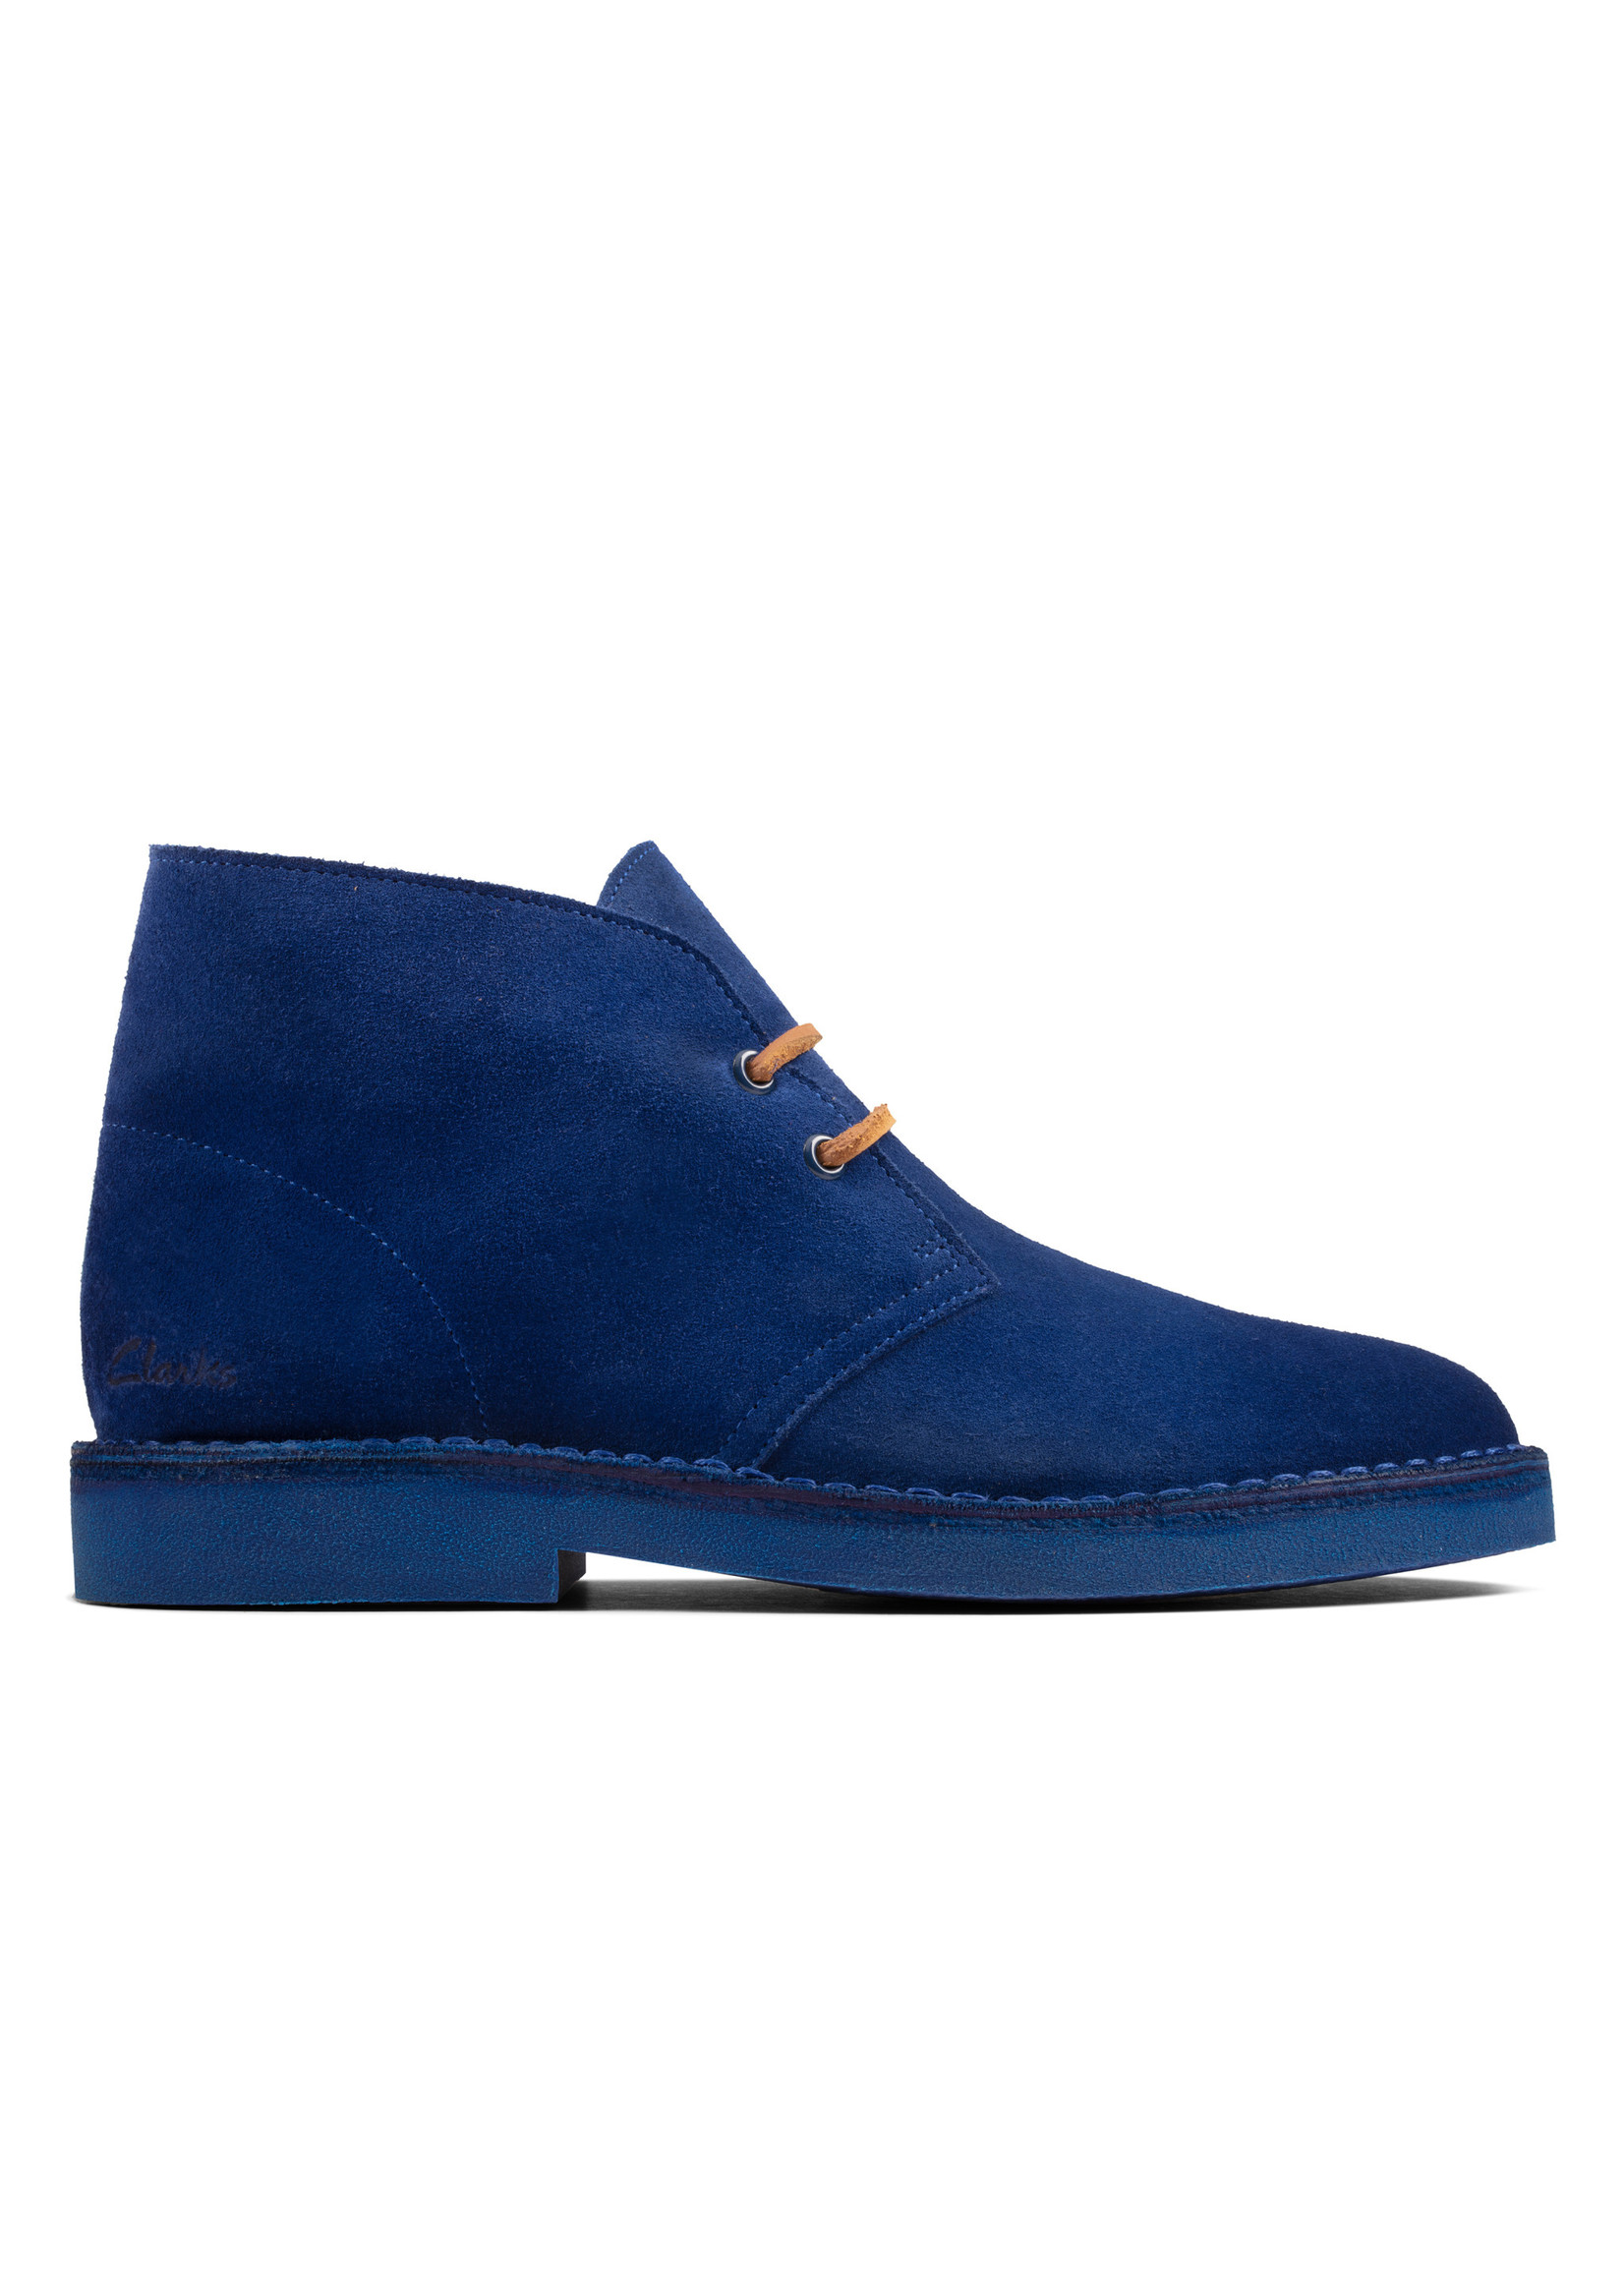 clarks shoes blue suede